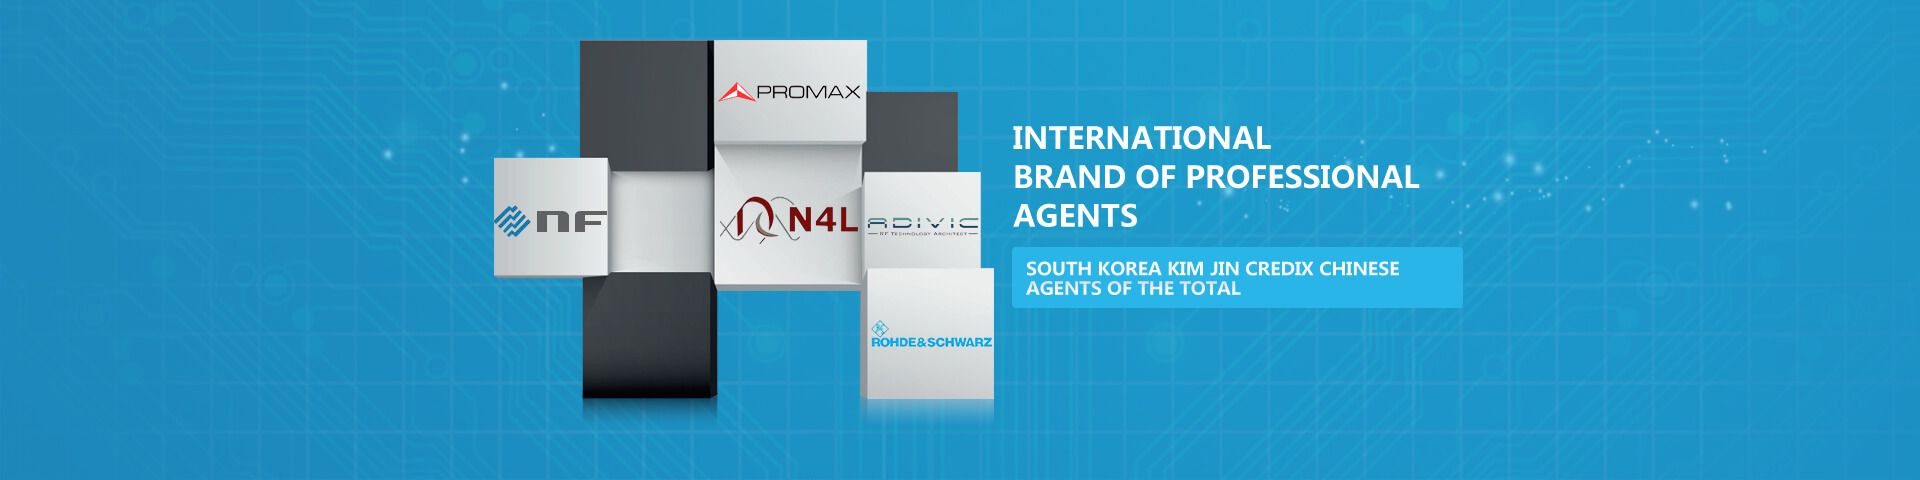 National brand agent